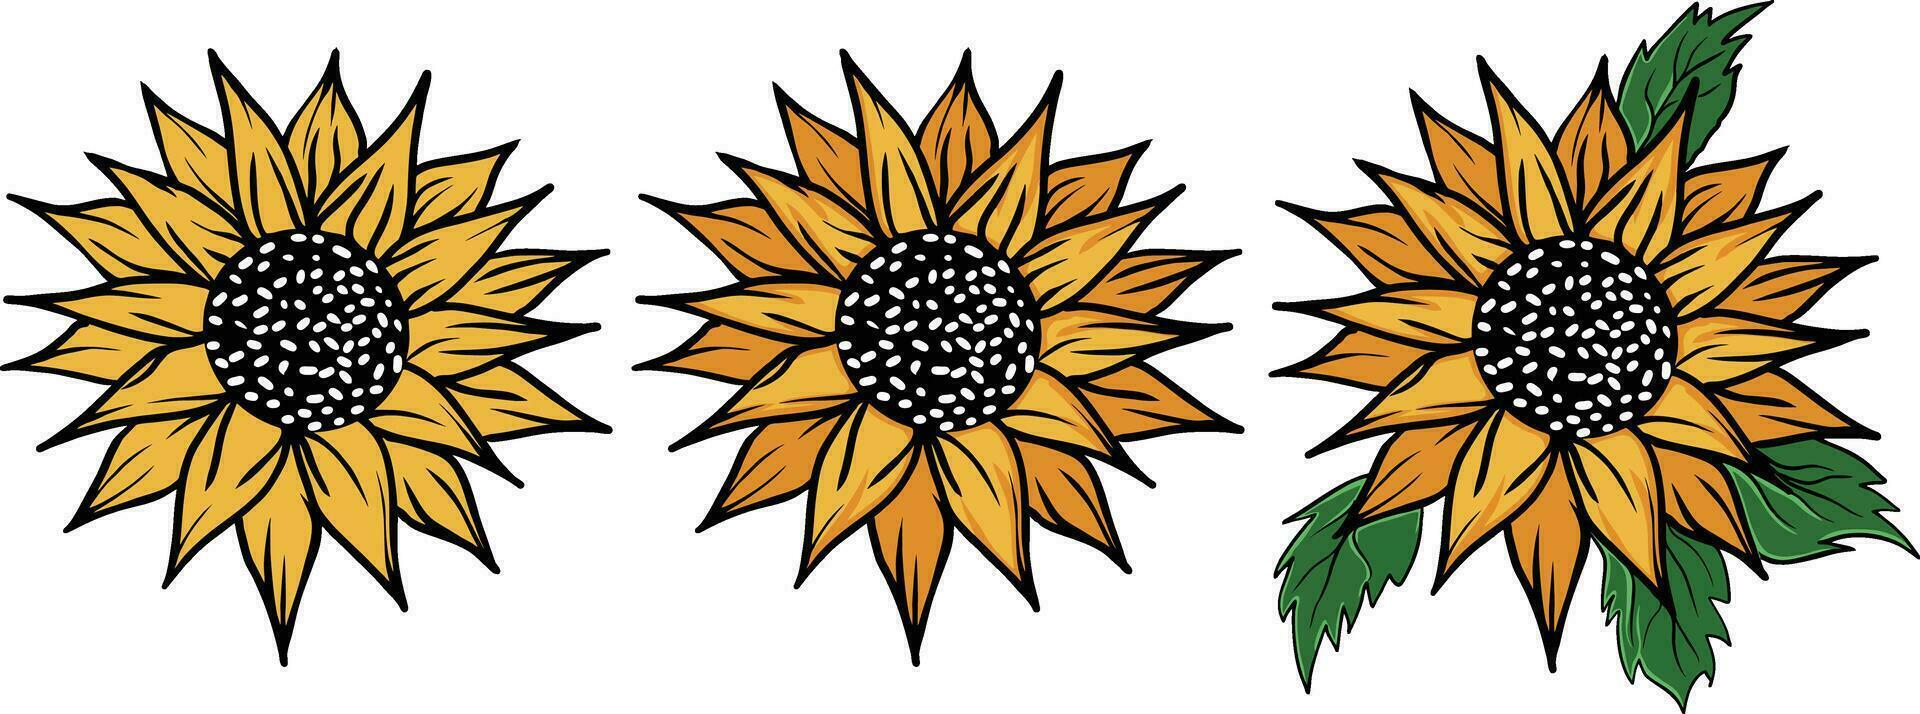 Sunflowers set  vector illustration. Sunflower isolated. Botanical floral illustration